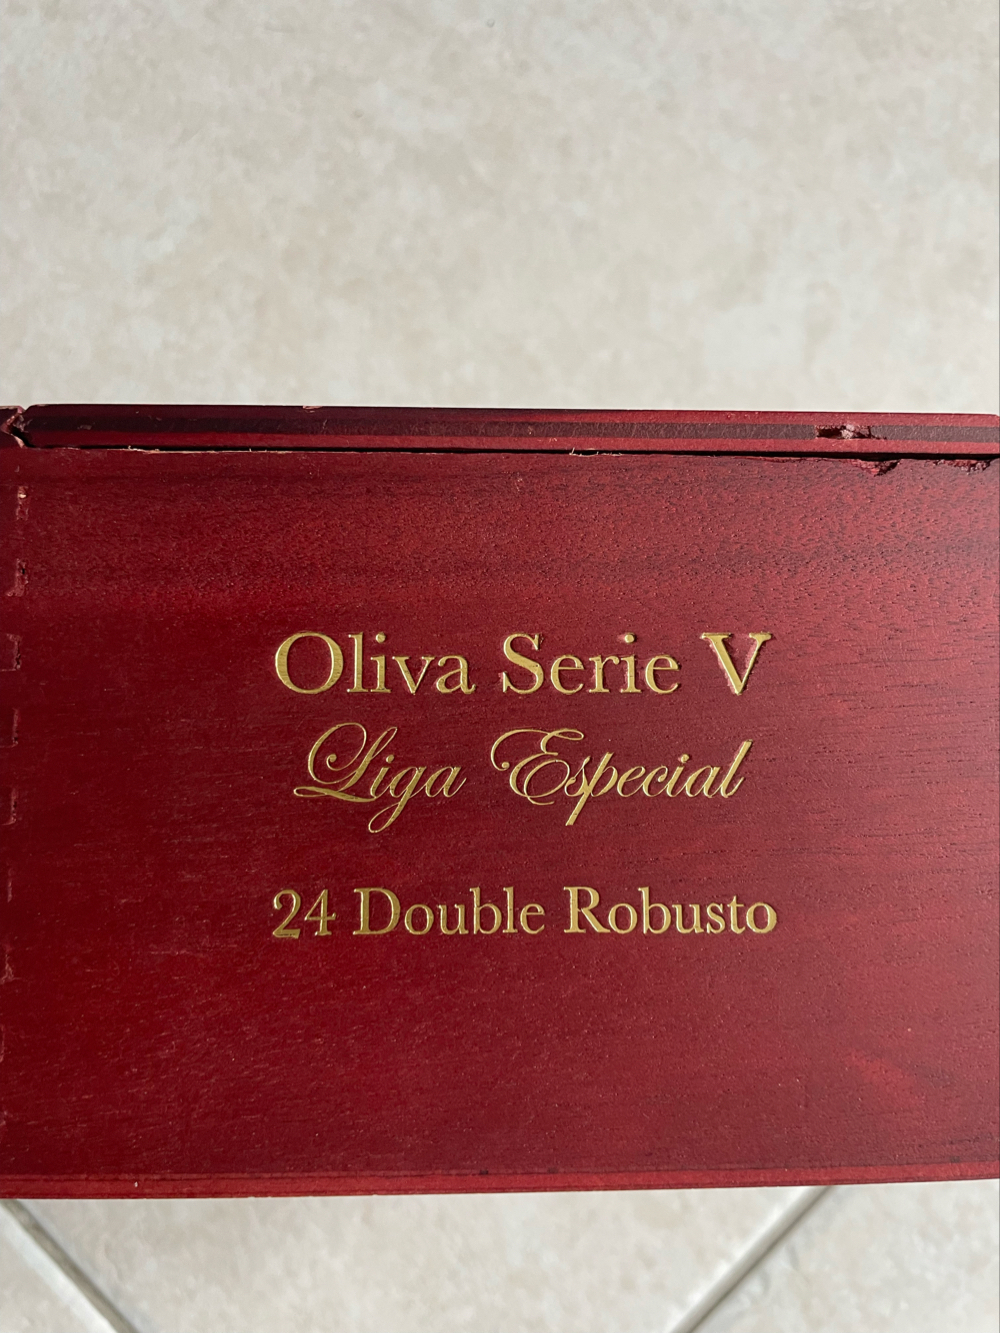 Zigarren Kiste mit 24 Oliva Serie V Double Robusto